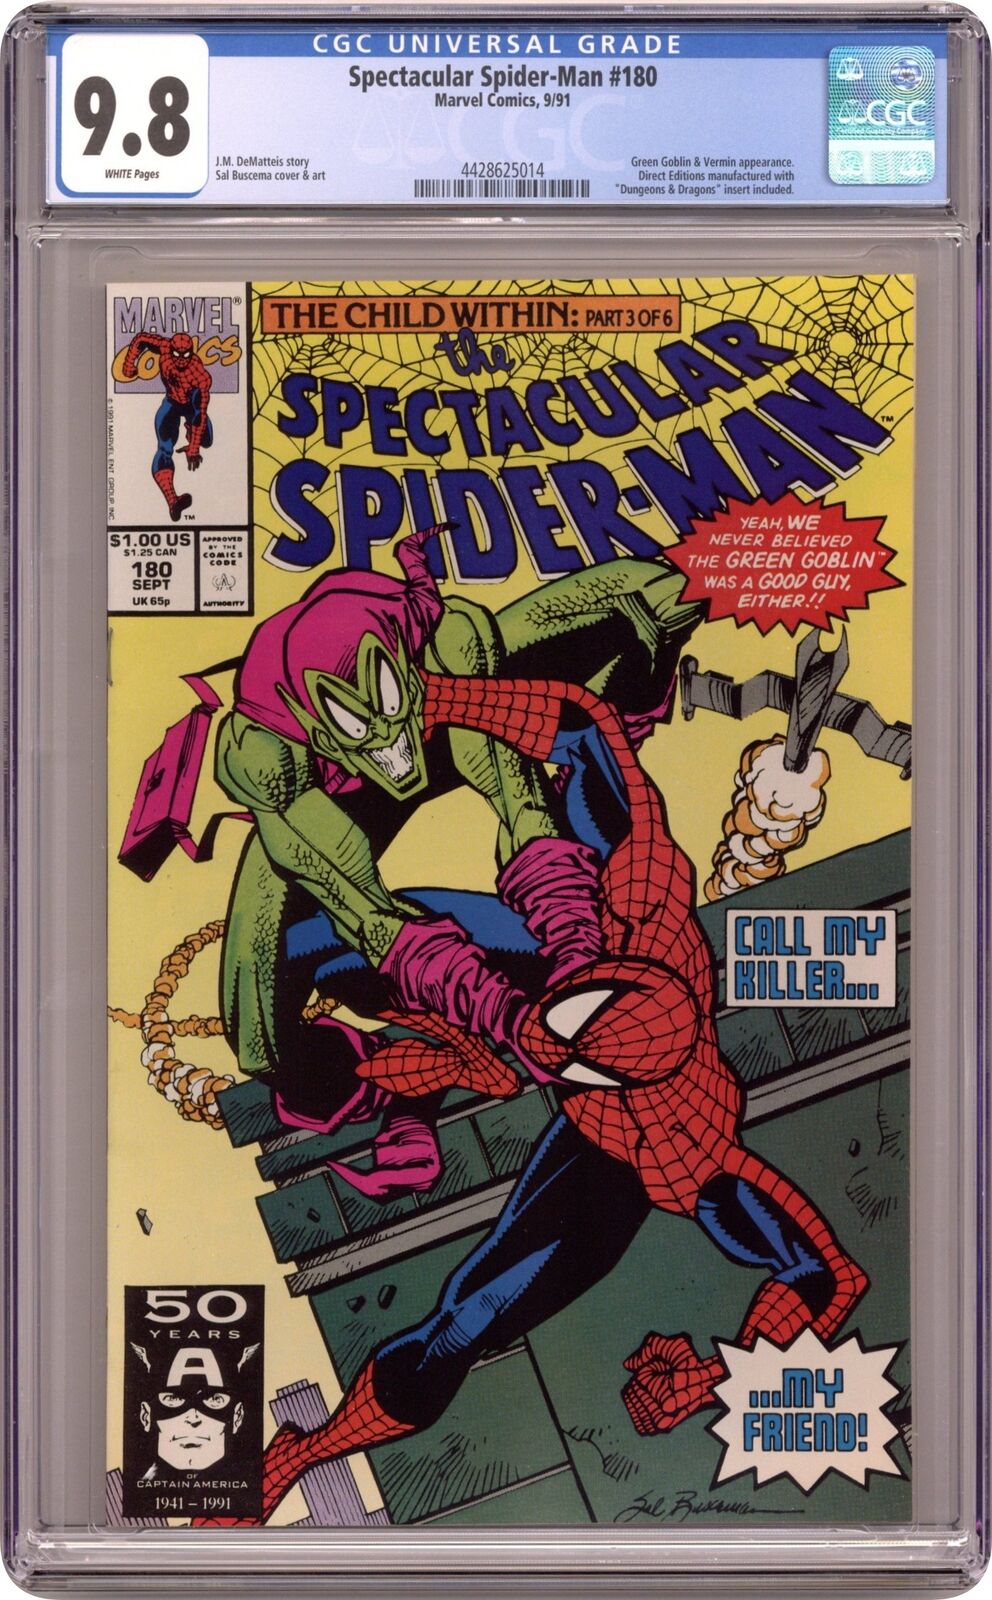 Spectacular Spider-Man Peter Parker #180 CGC 9.8 1991 4428625014